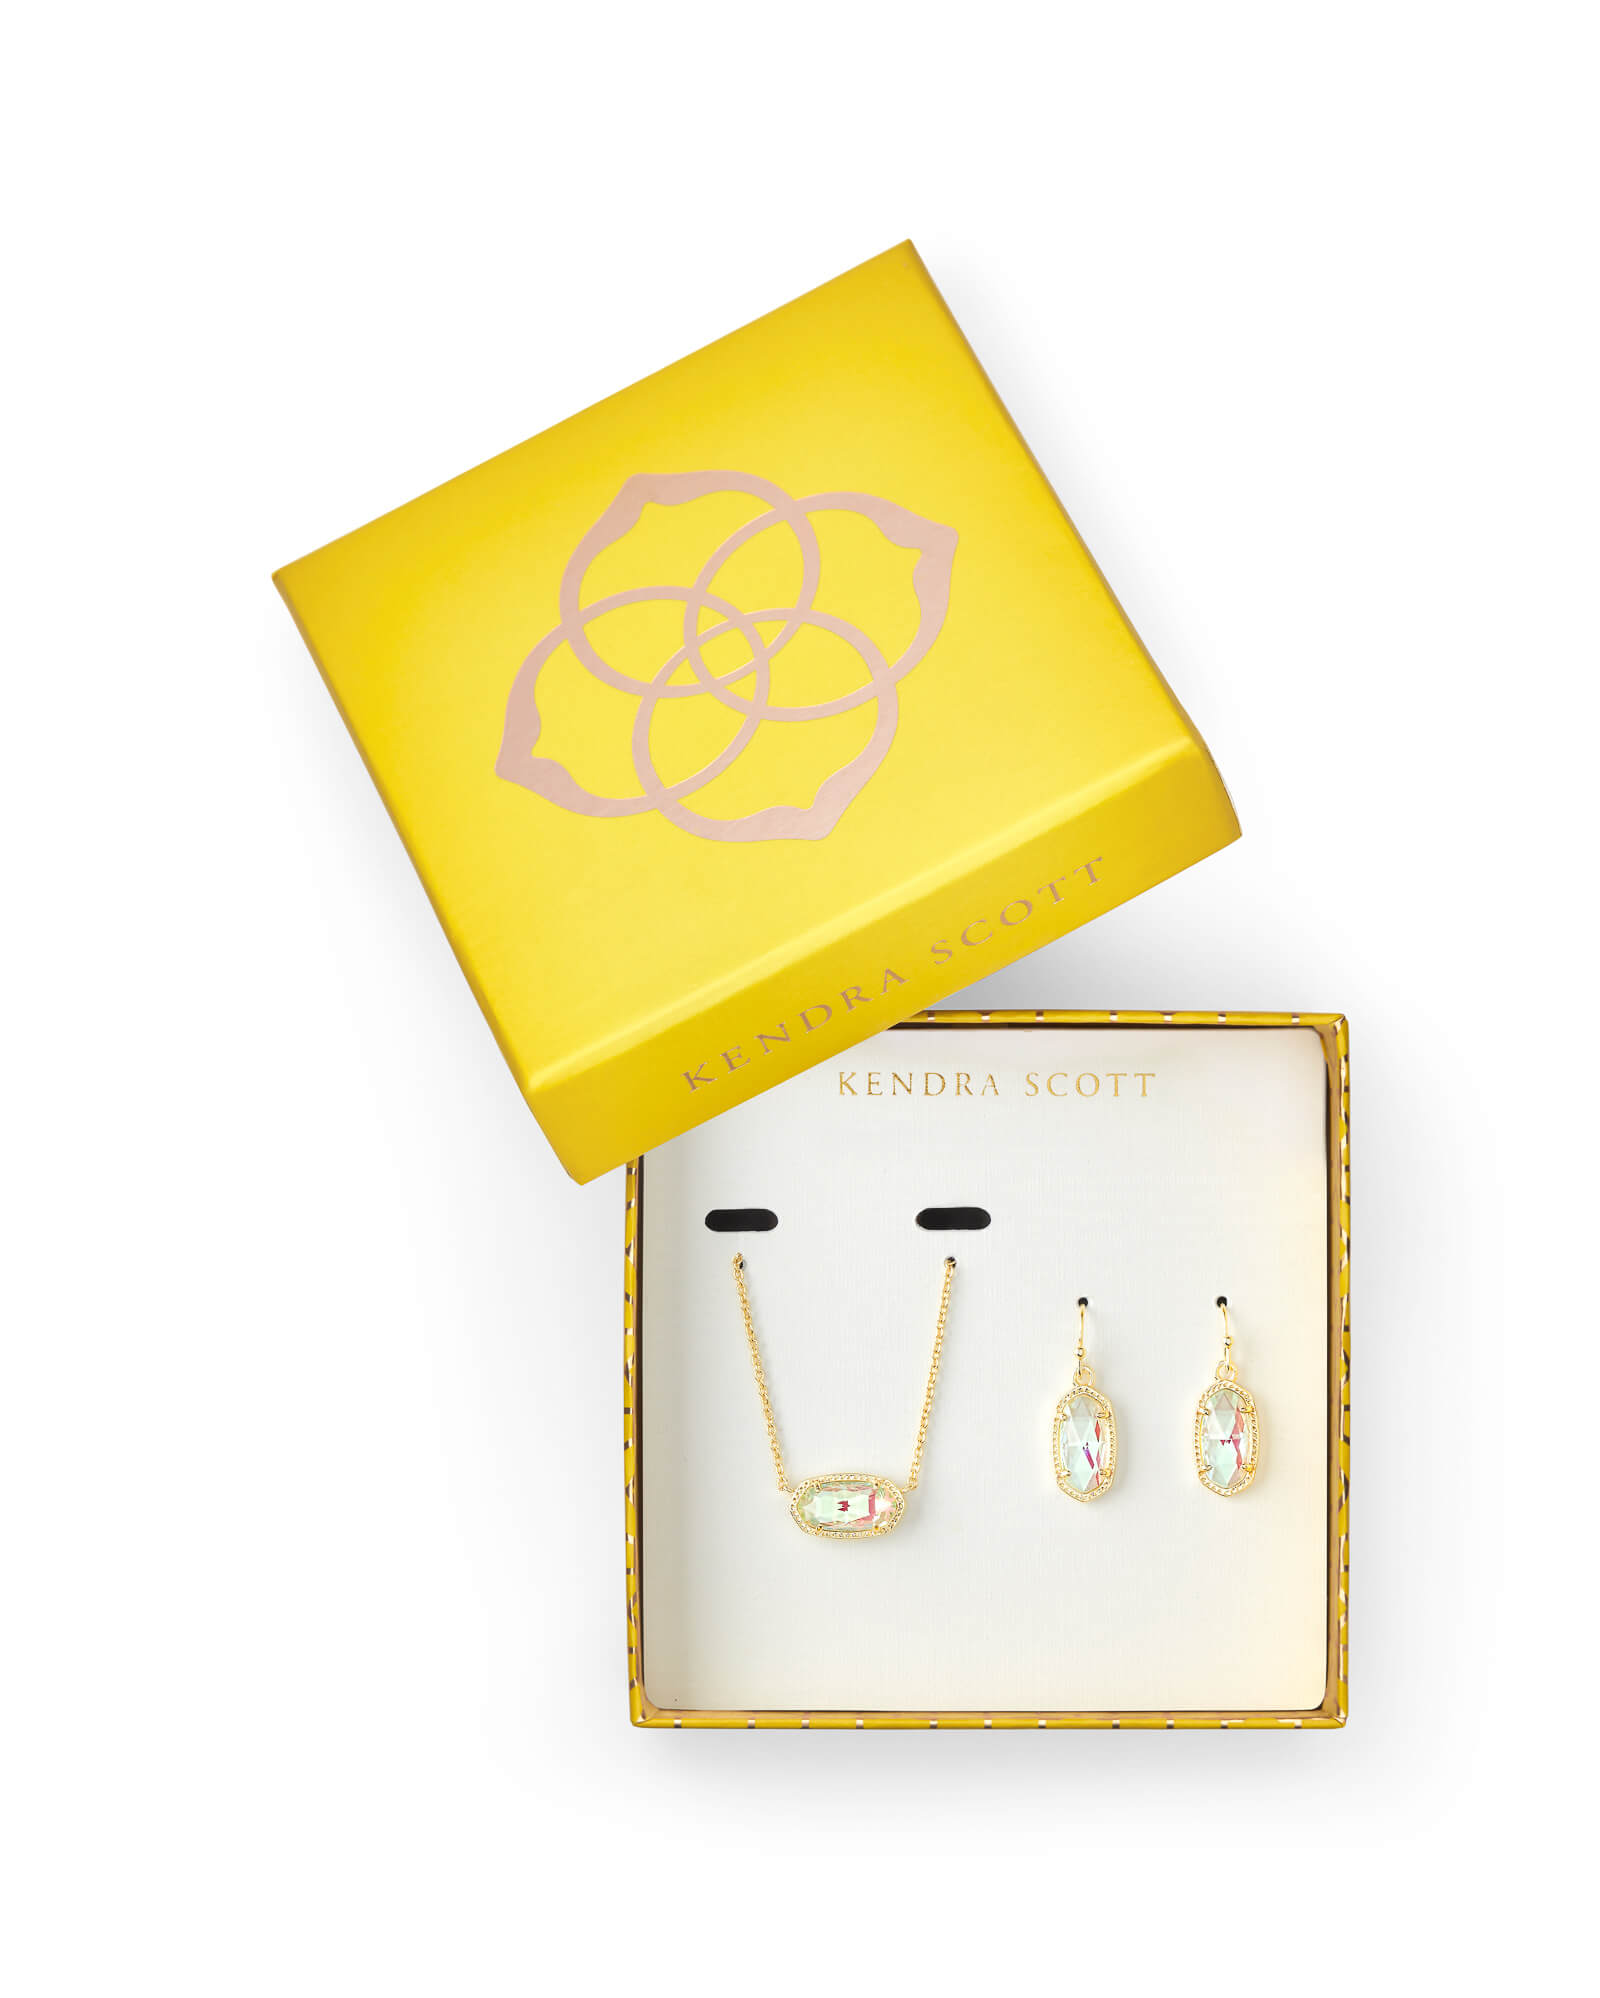 https://www.kendrascott.com/on/demandware.static/-/Sites-kendrascott/default/dw9a77c1b6/jewelry/gift-sets/2019-mothers-day/elisa-lee-gift-set/kendra-scott-elisa-necklace-lee-earring-gift-set-gold-clear-dichroic-glass-01-lg.jpg